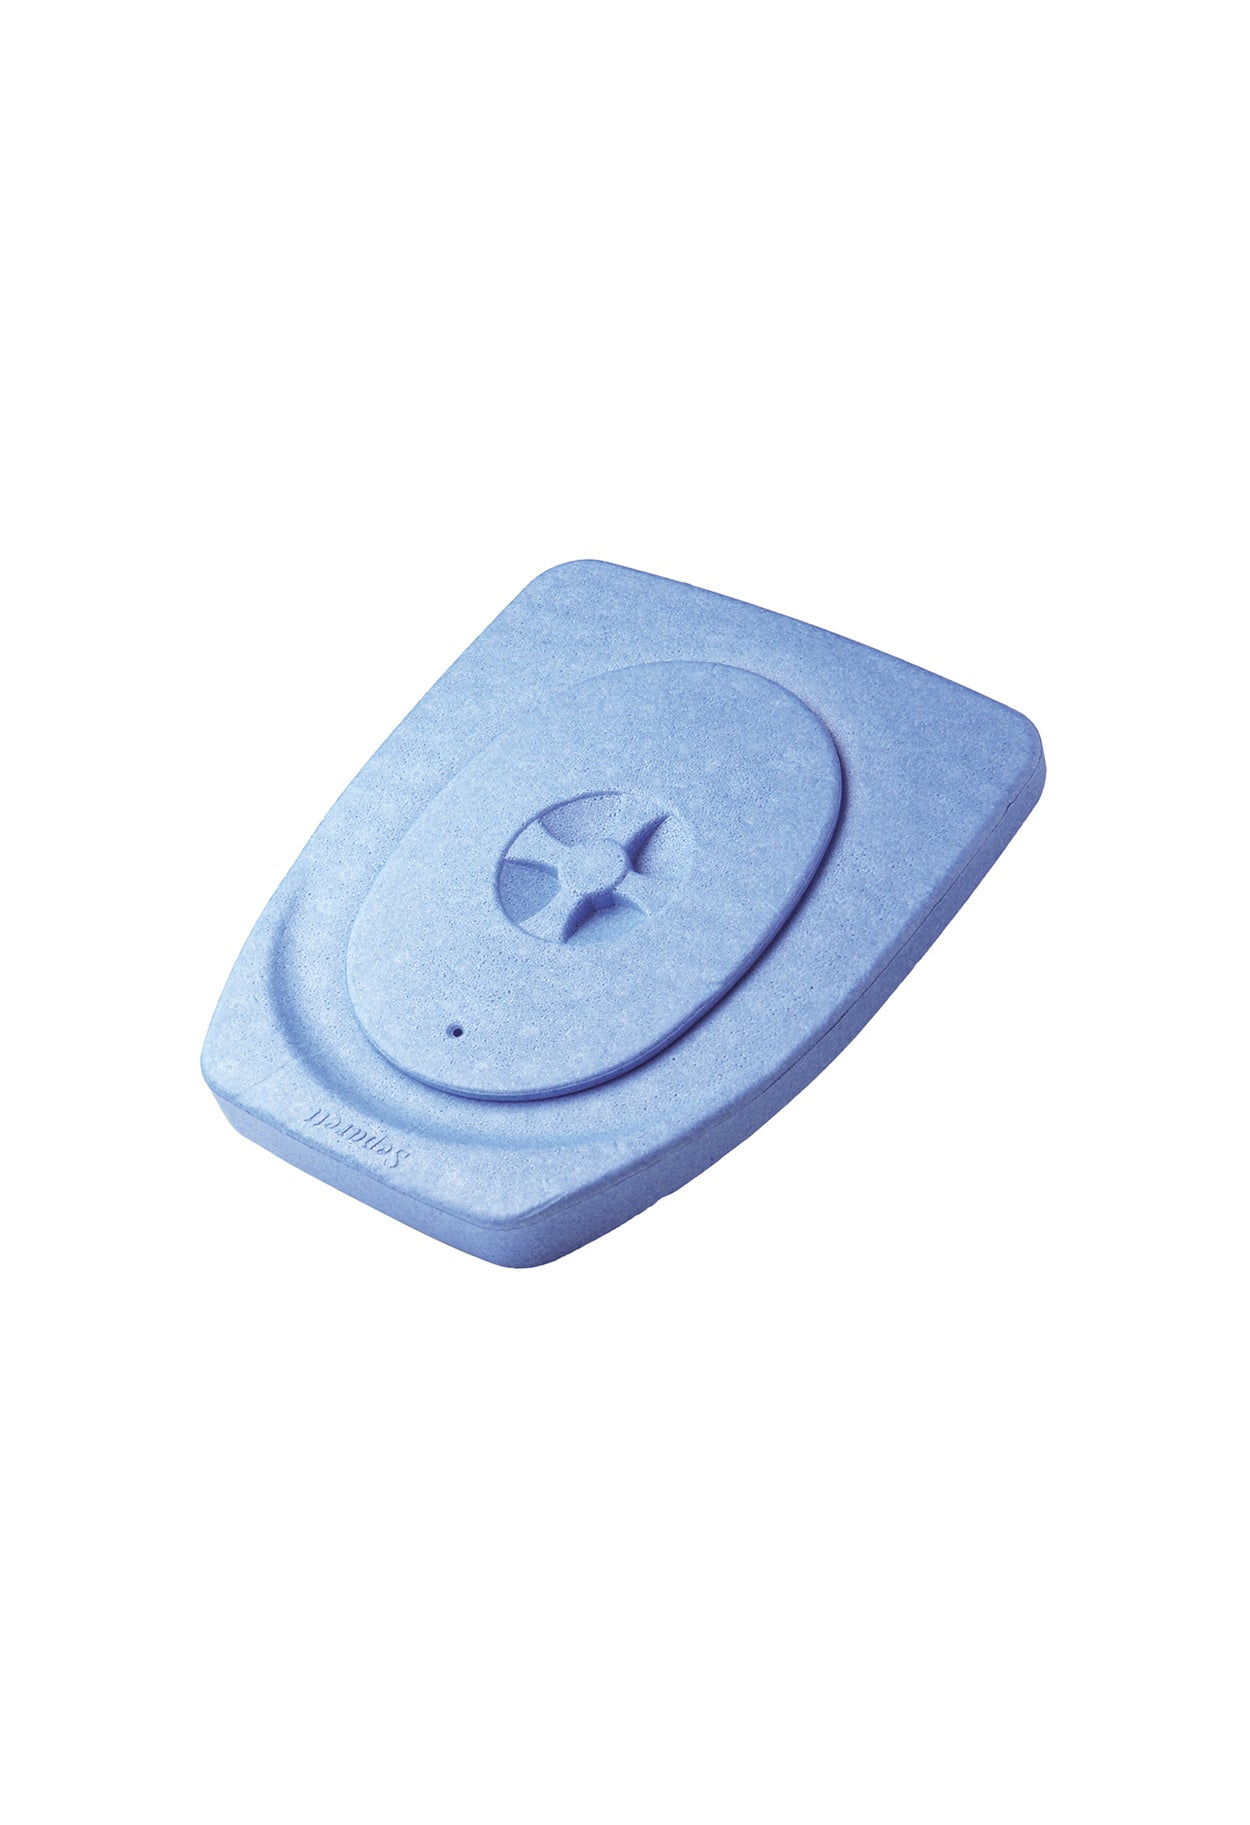 Insulated styrofoam seat in blue